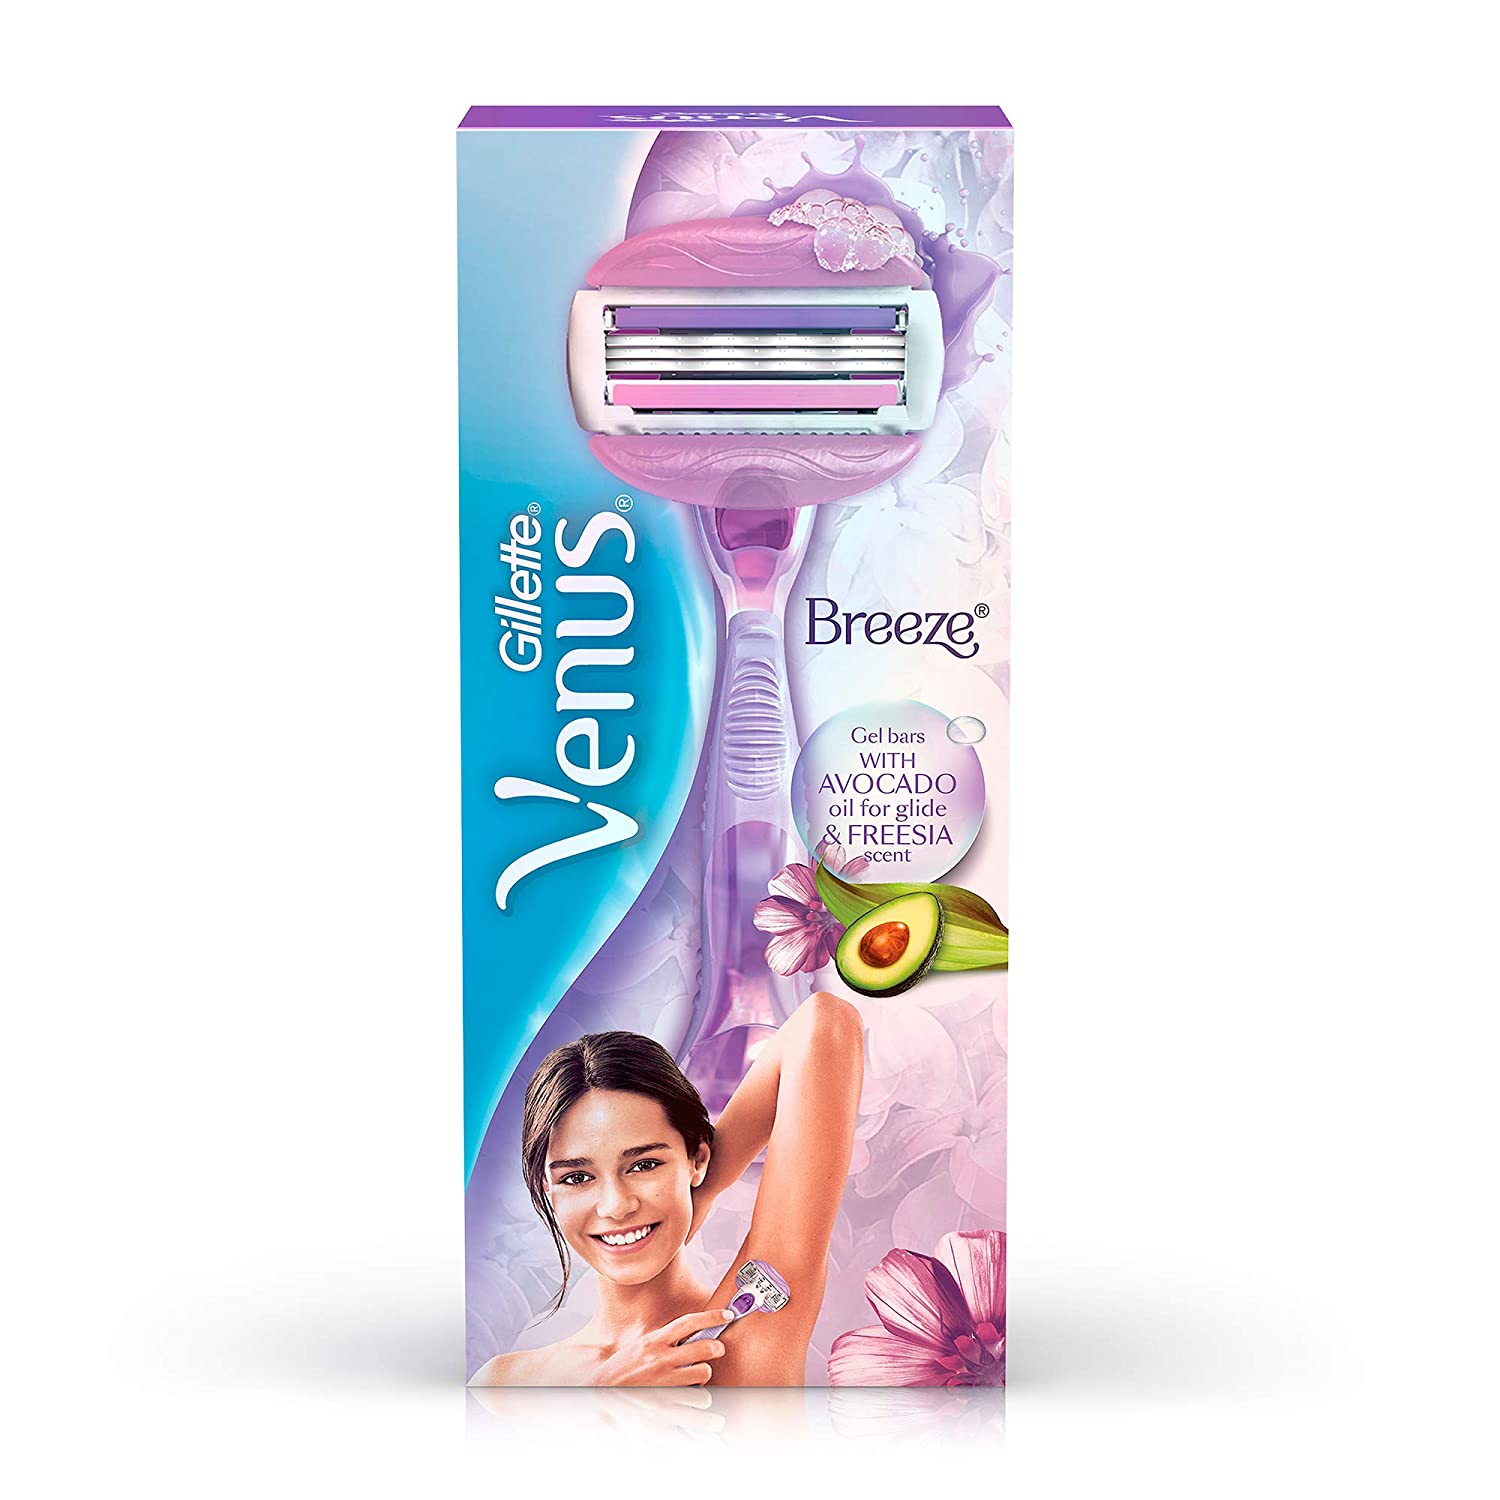 Gillette Venus Breeze Hair Removal Razor for Women with Avocado Oils & Body Butter, Freesia Scent, 1 Pc